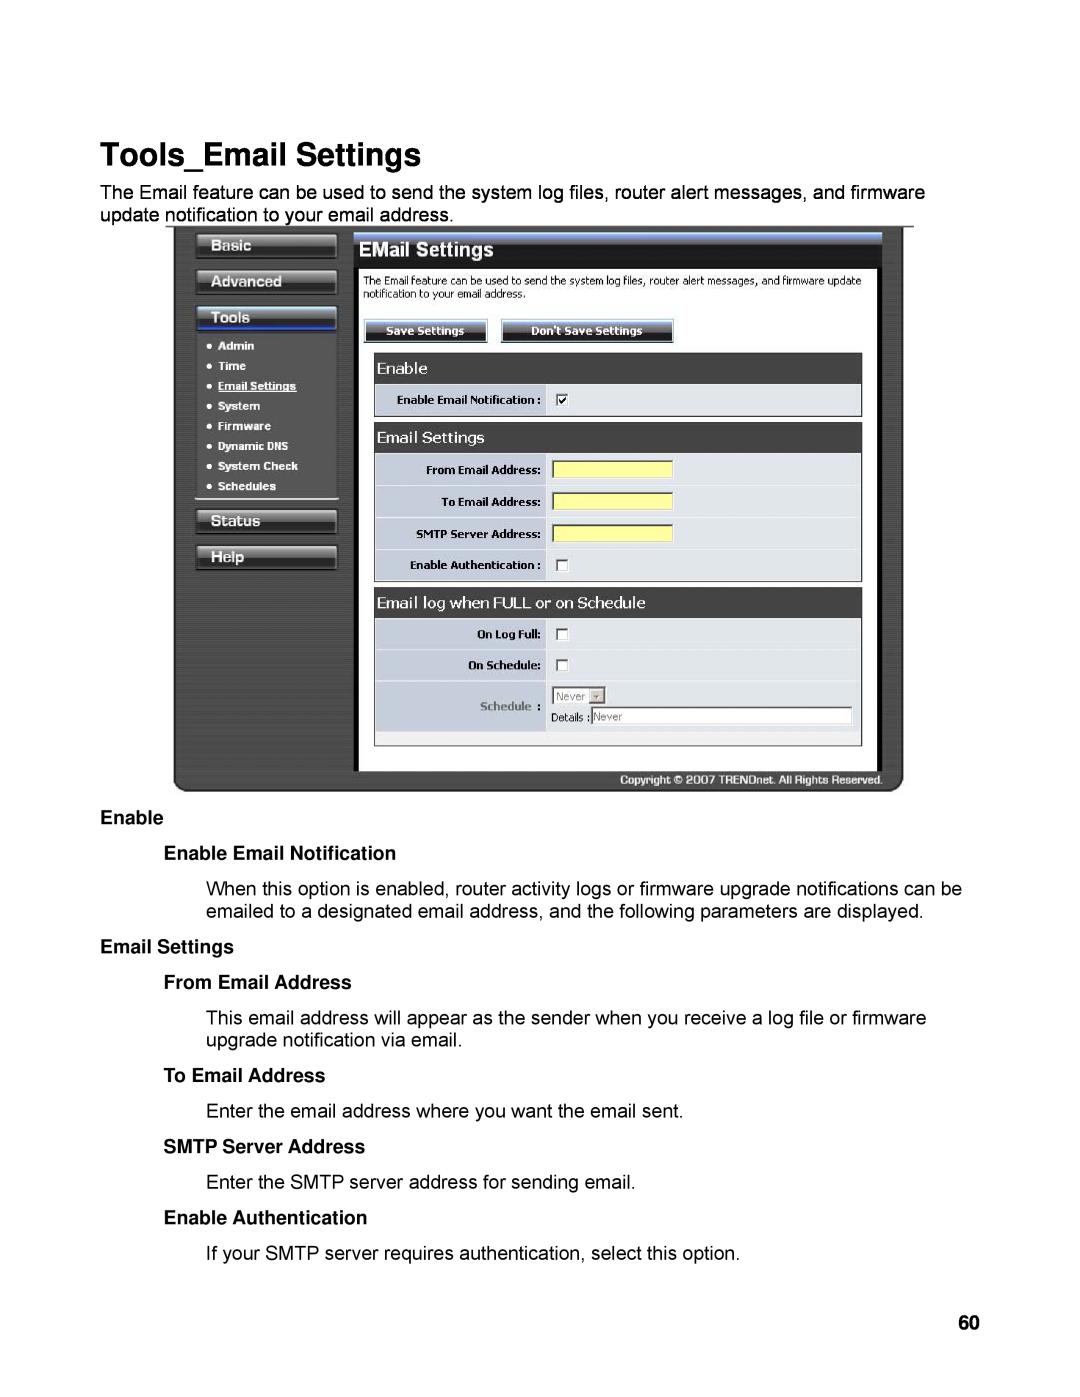 TRENDnet TEW-633GR manual ToolsEmail Settings, Enable Enable Email Notification, Email Settings From Email Address 